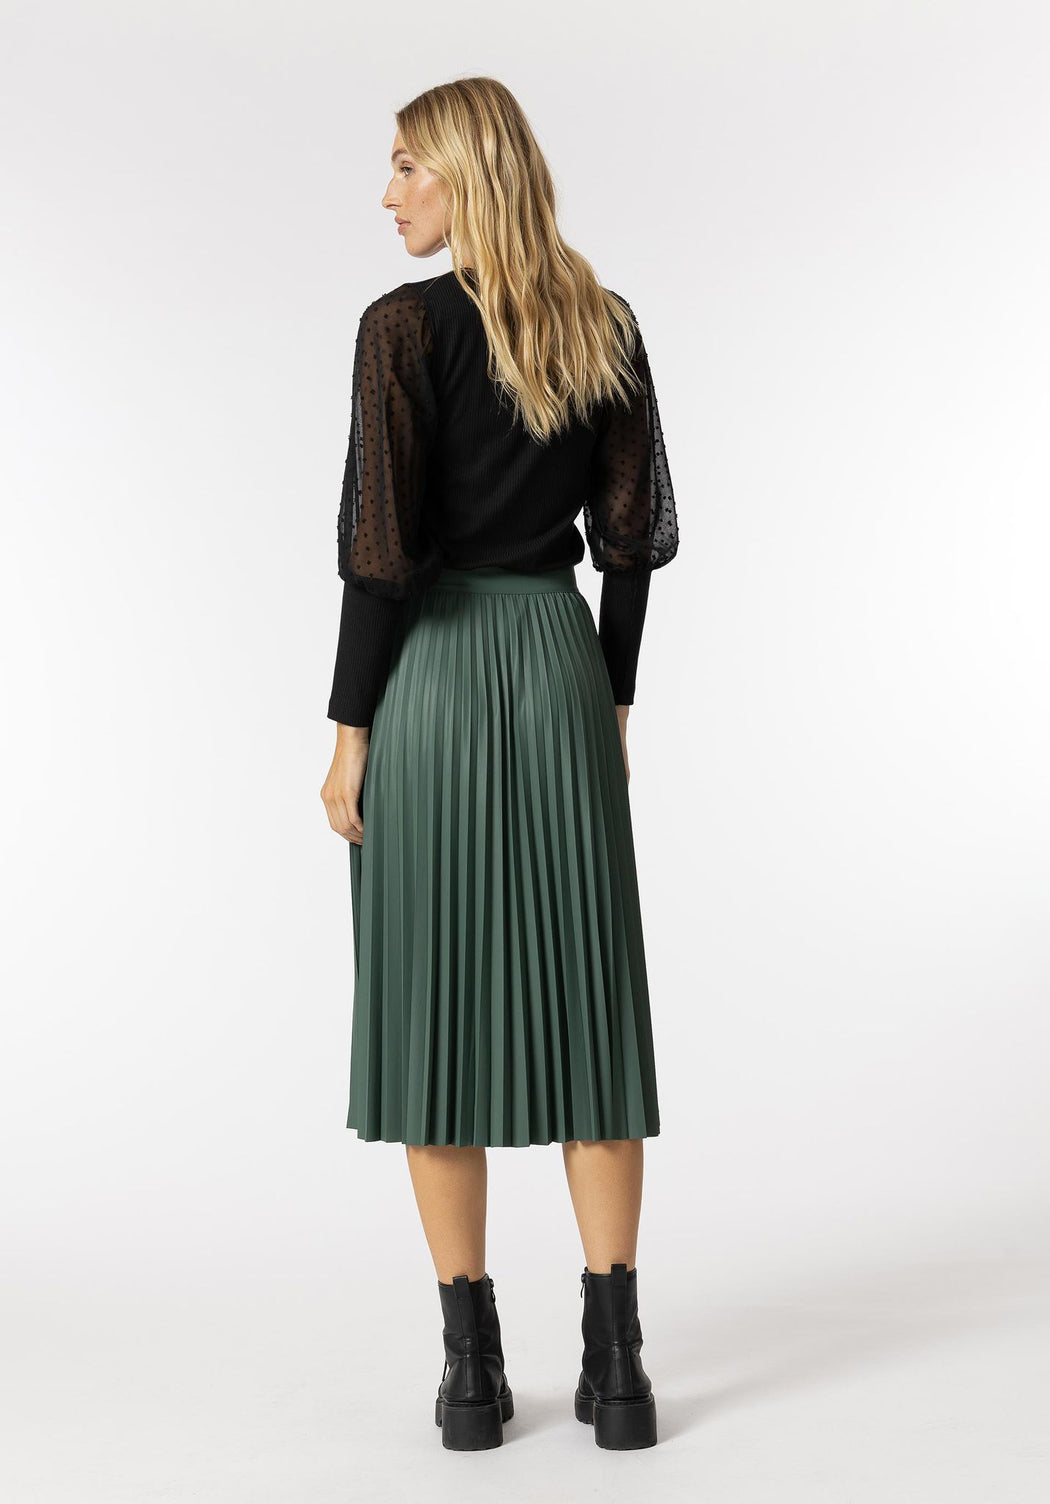 Kyoto pu green leather skirt